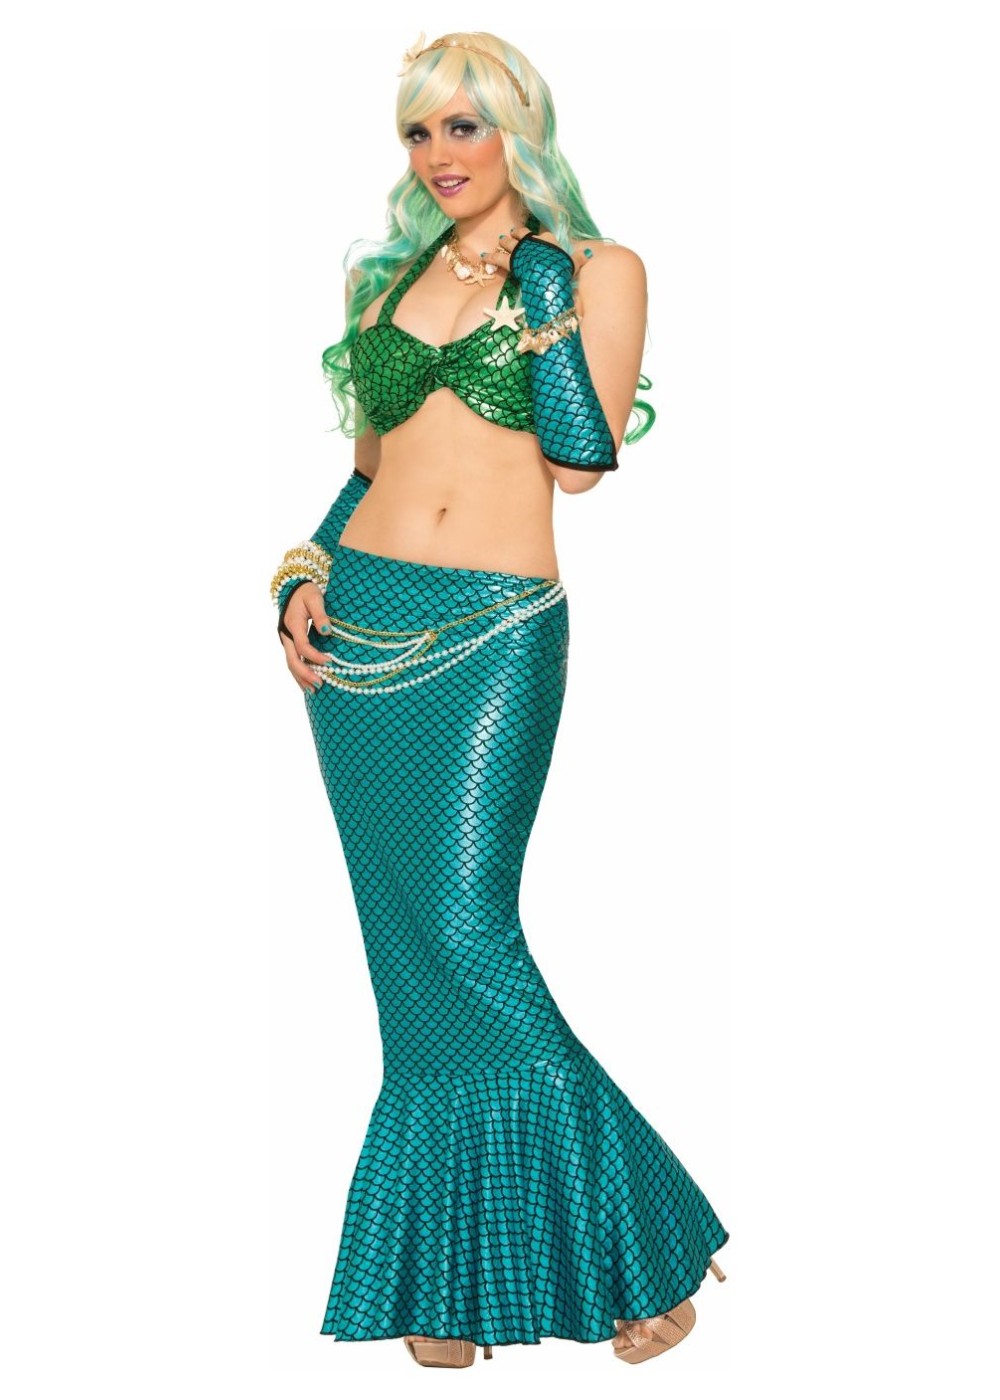 Blue And Green Mermaid Woman Costume